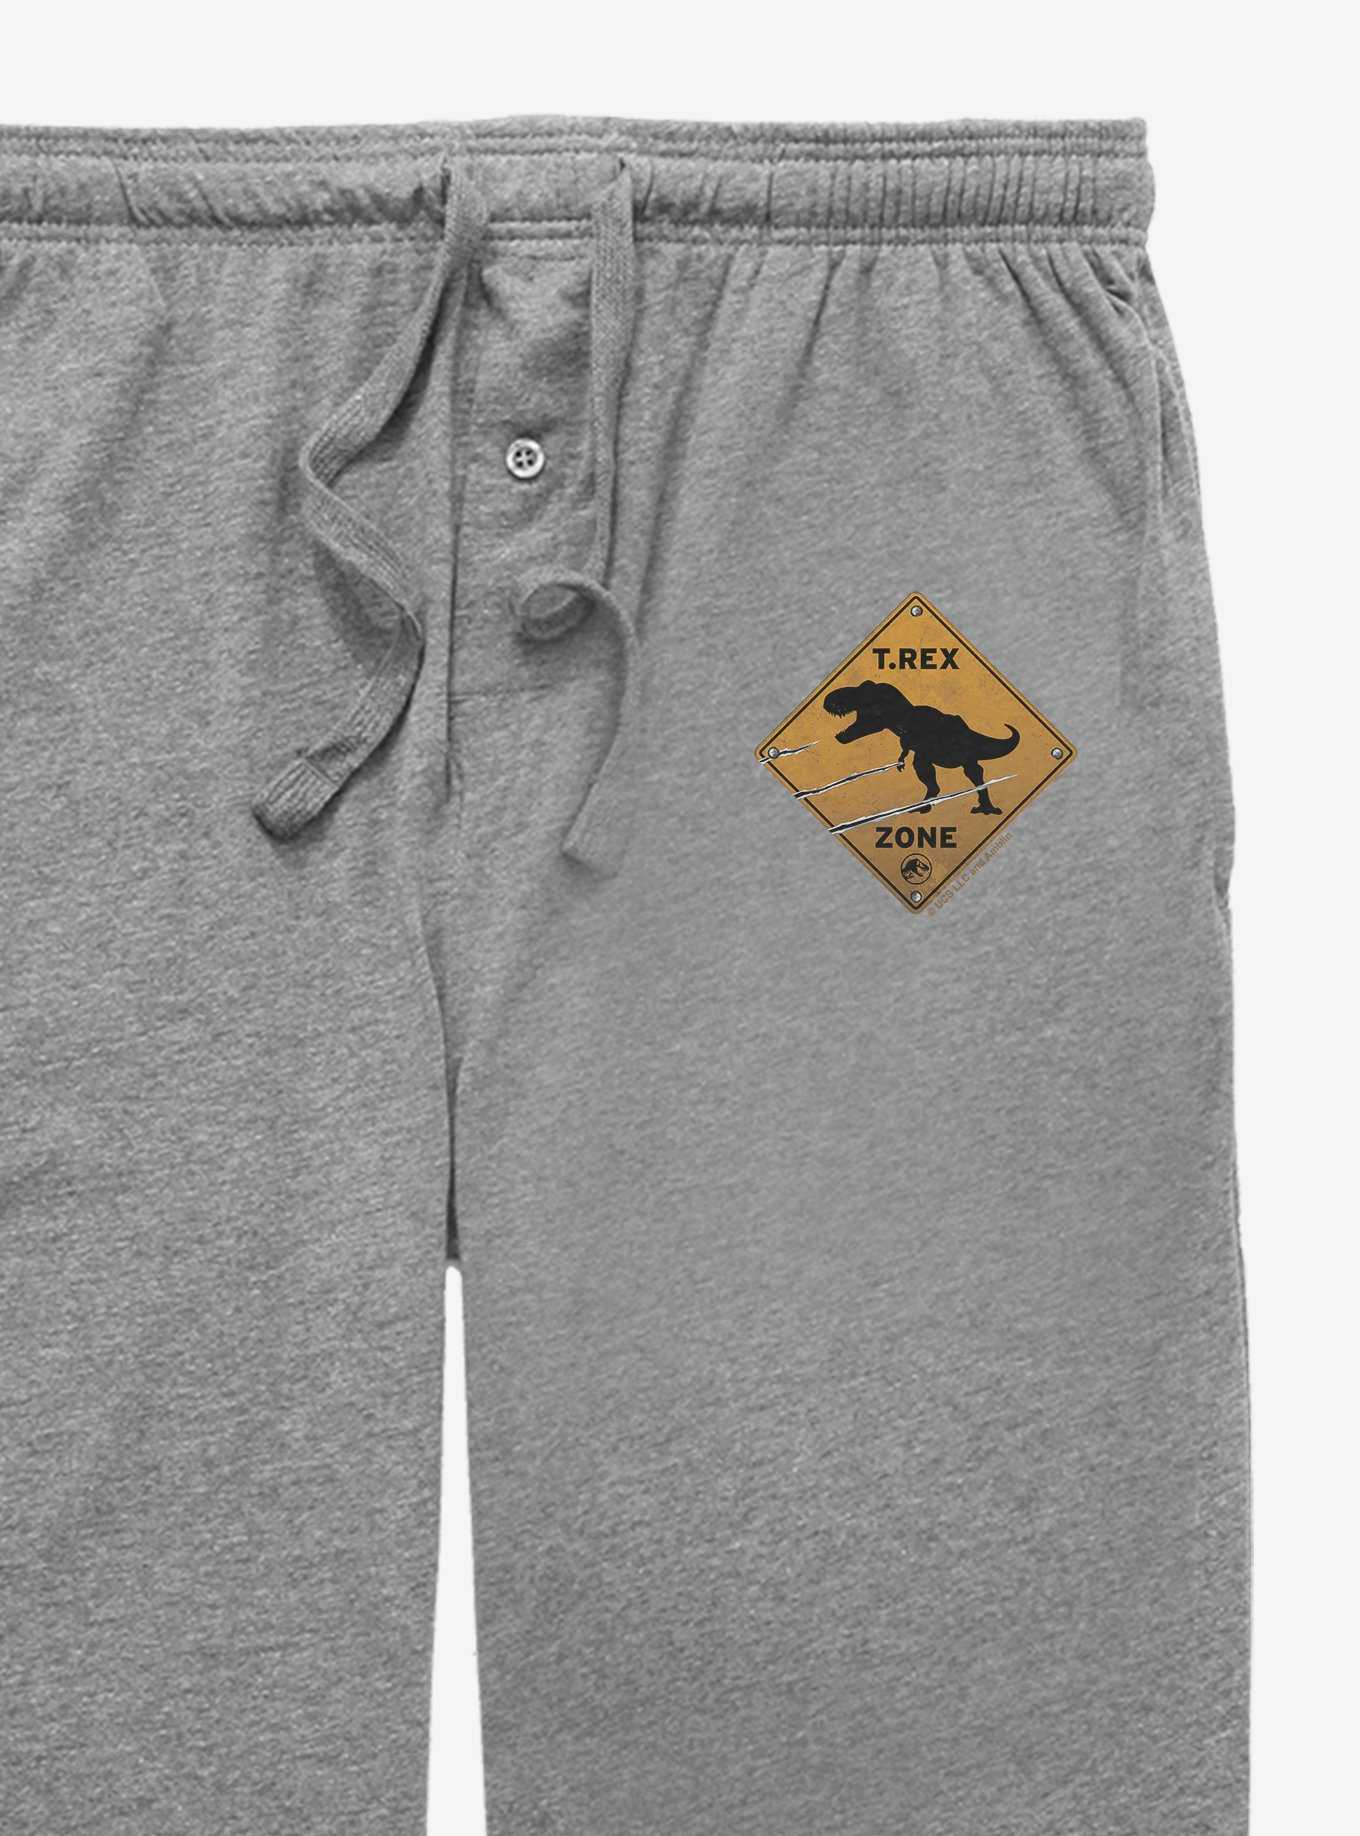 Jurassic World T-Rex Zone Sign Pajama Pants, , hi-res